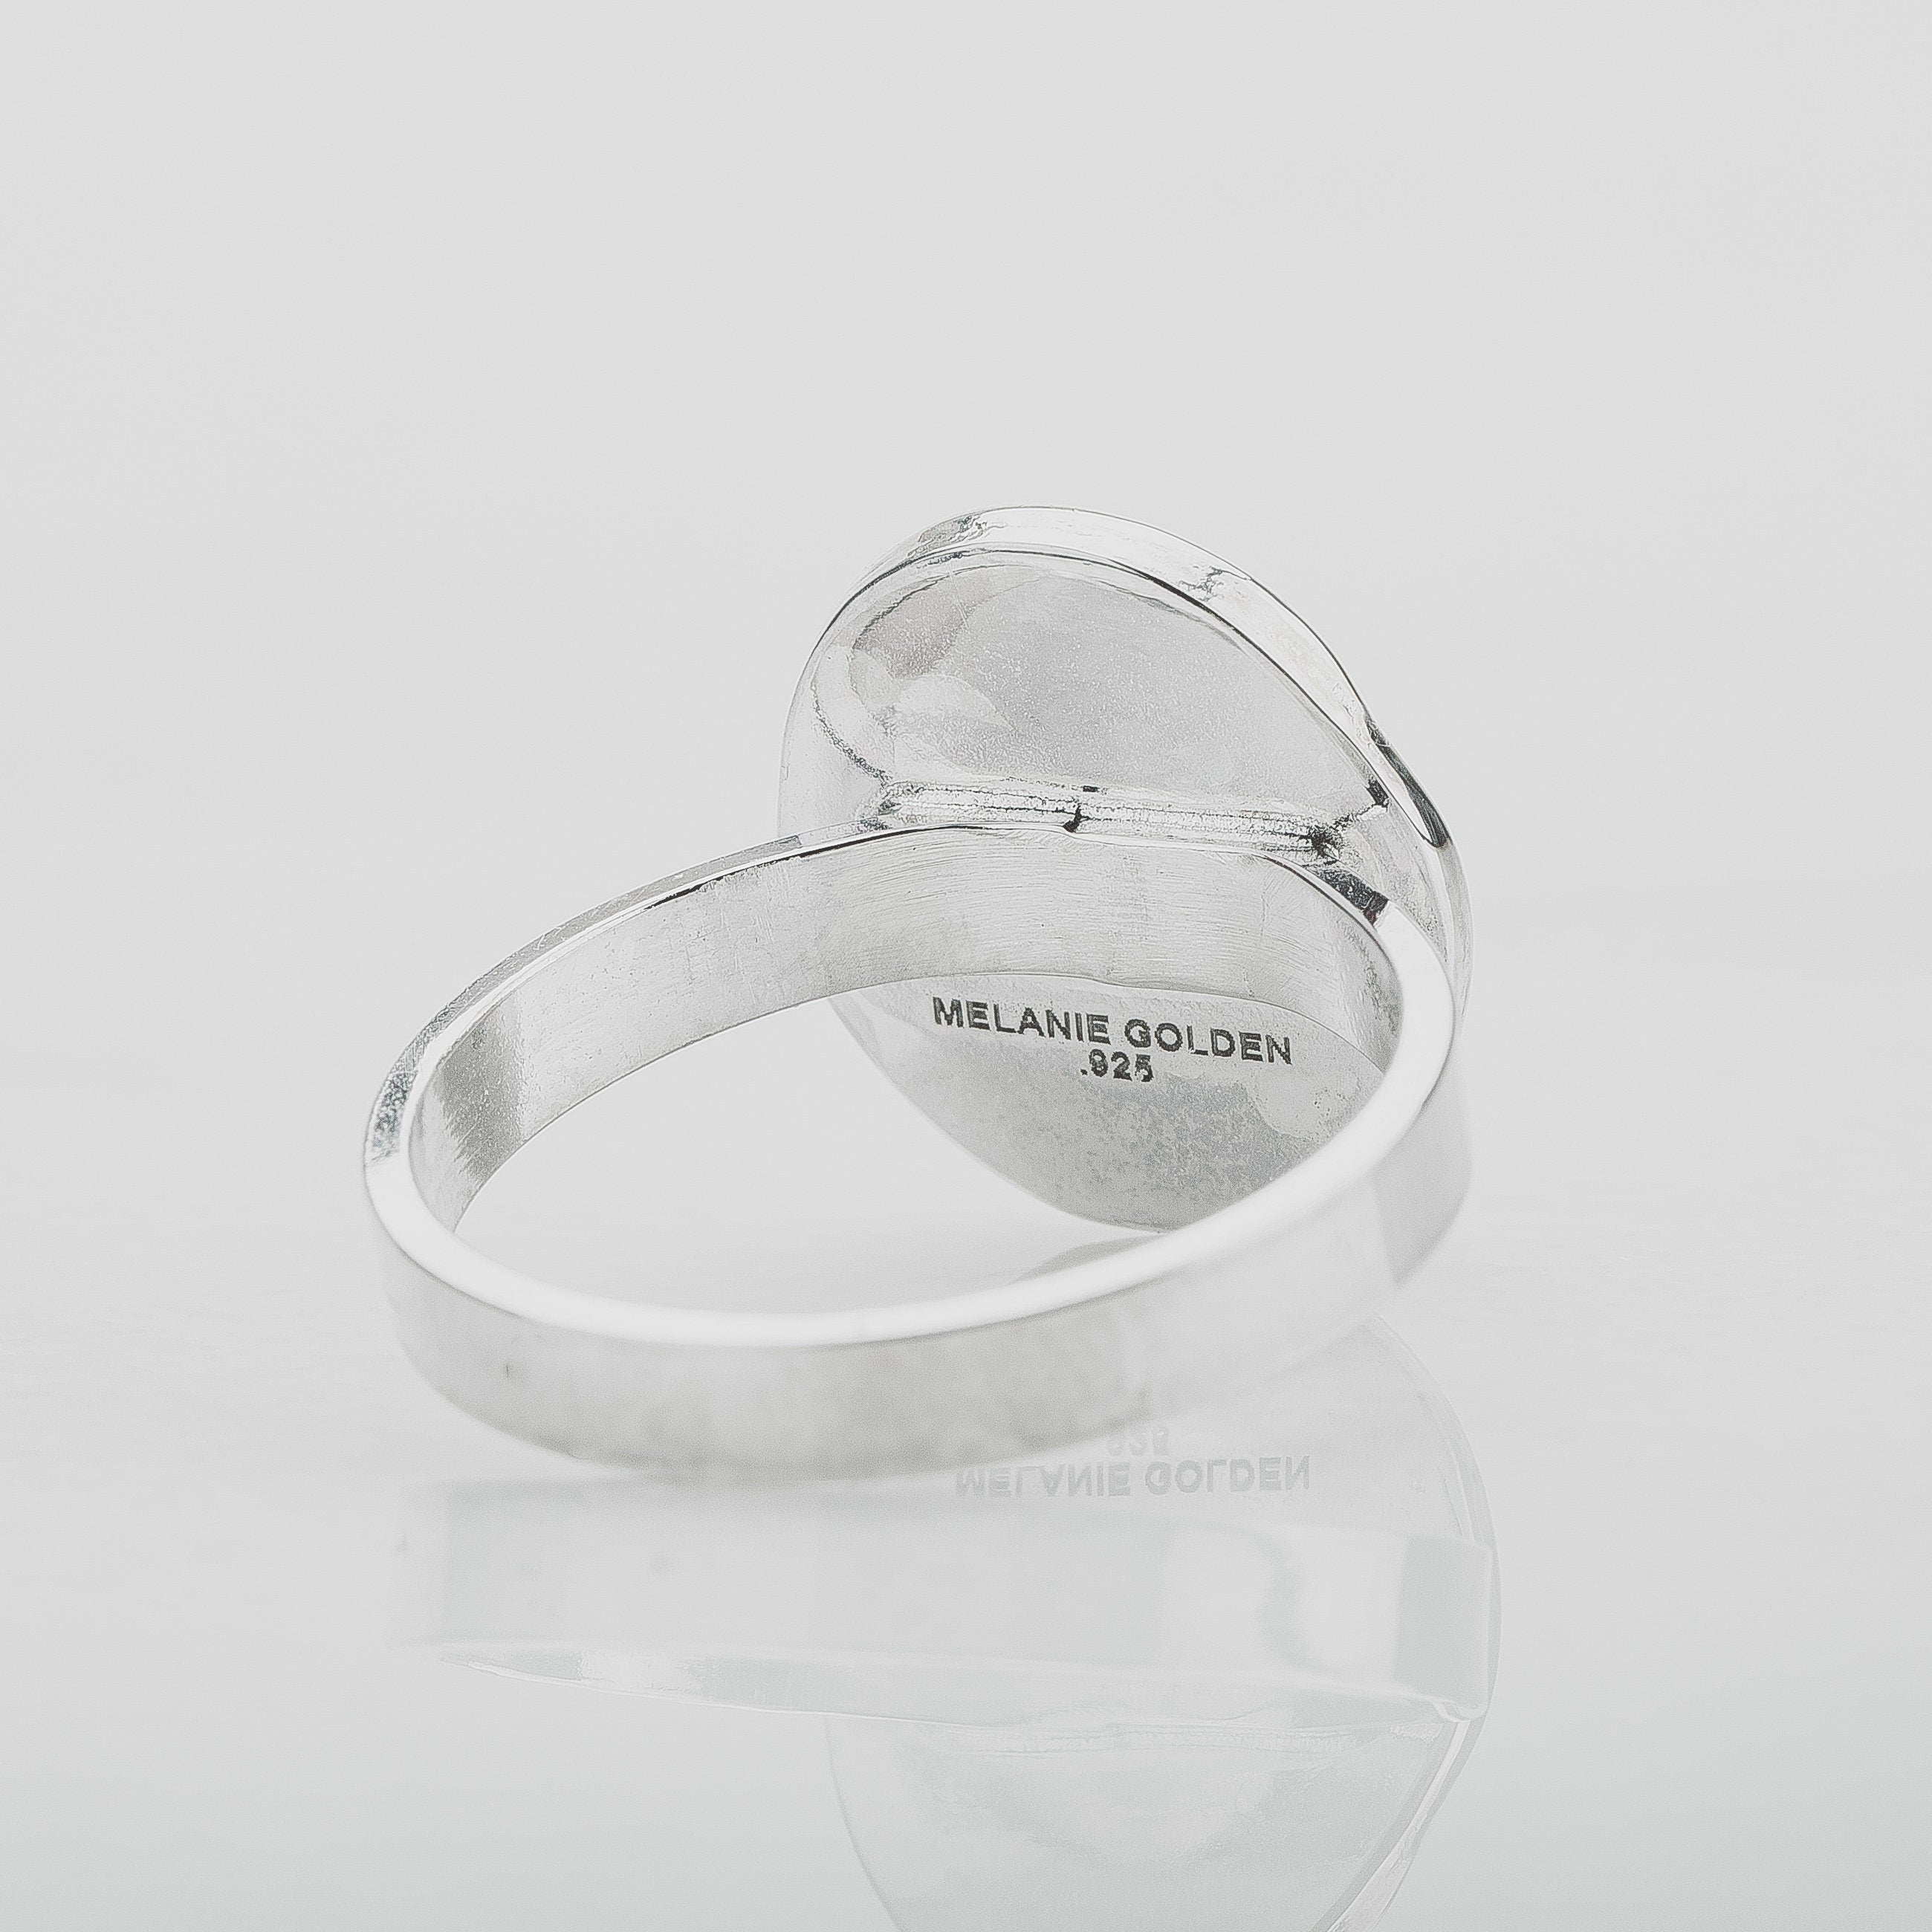 Size 7 Opal Ring - Melanie Golden Jewelry - gemstone rings, rings